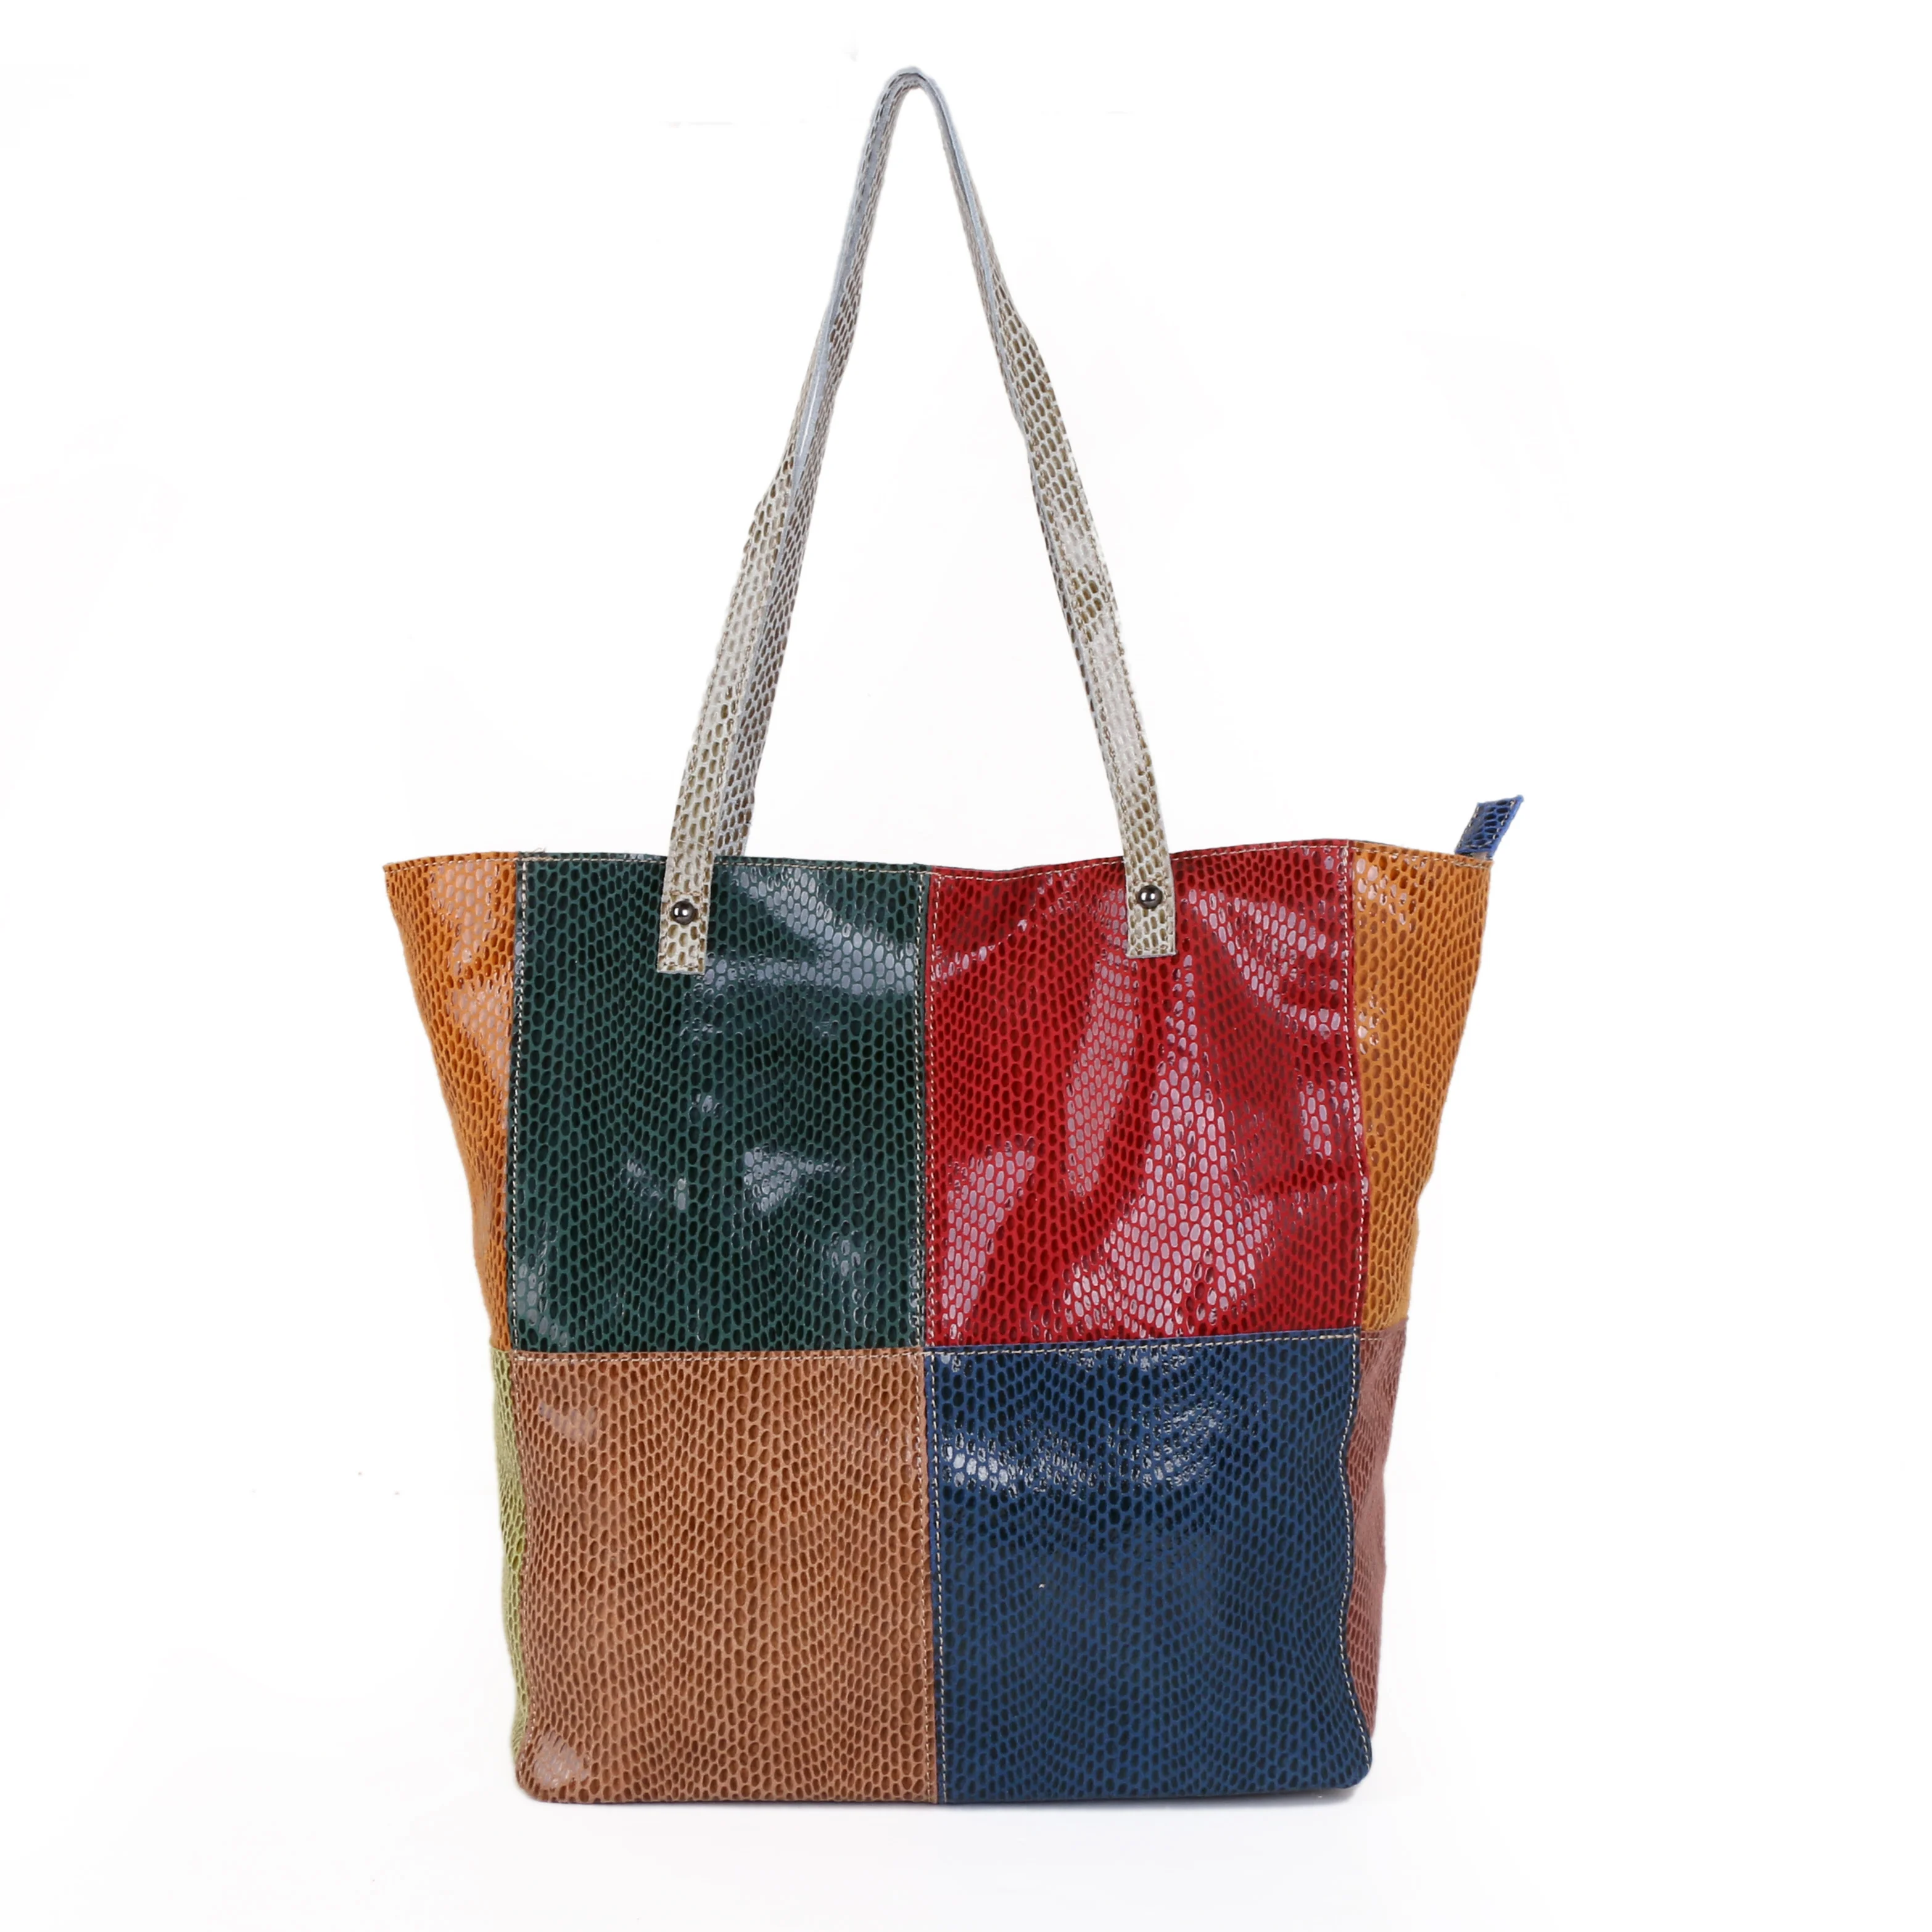 Genuine Leather Bag Handbags 2021 New Trendy Fashion Ladies Shoulder Bag Casual Portable Tote Bag Snake Skin Bag